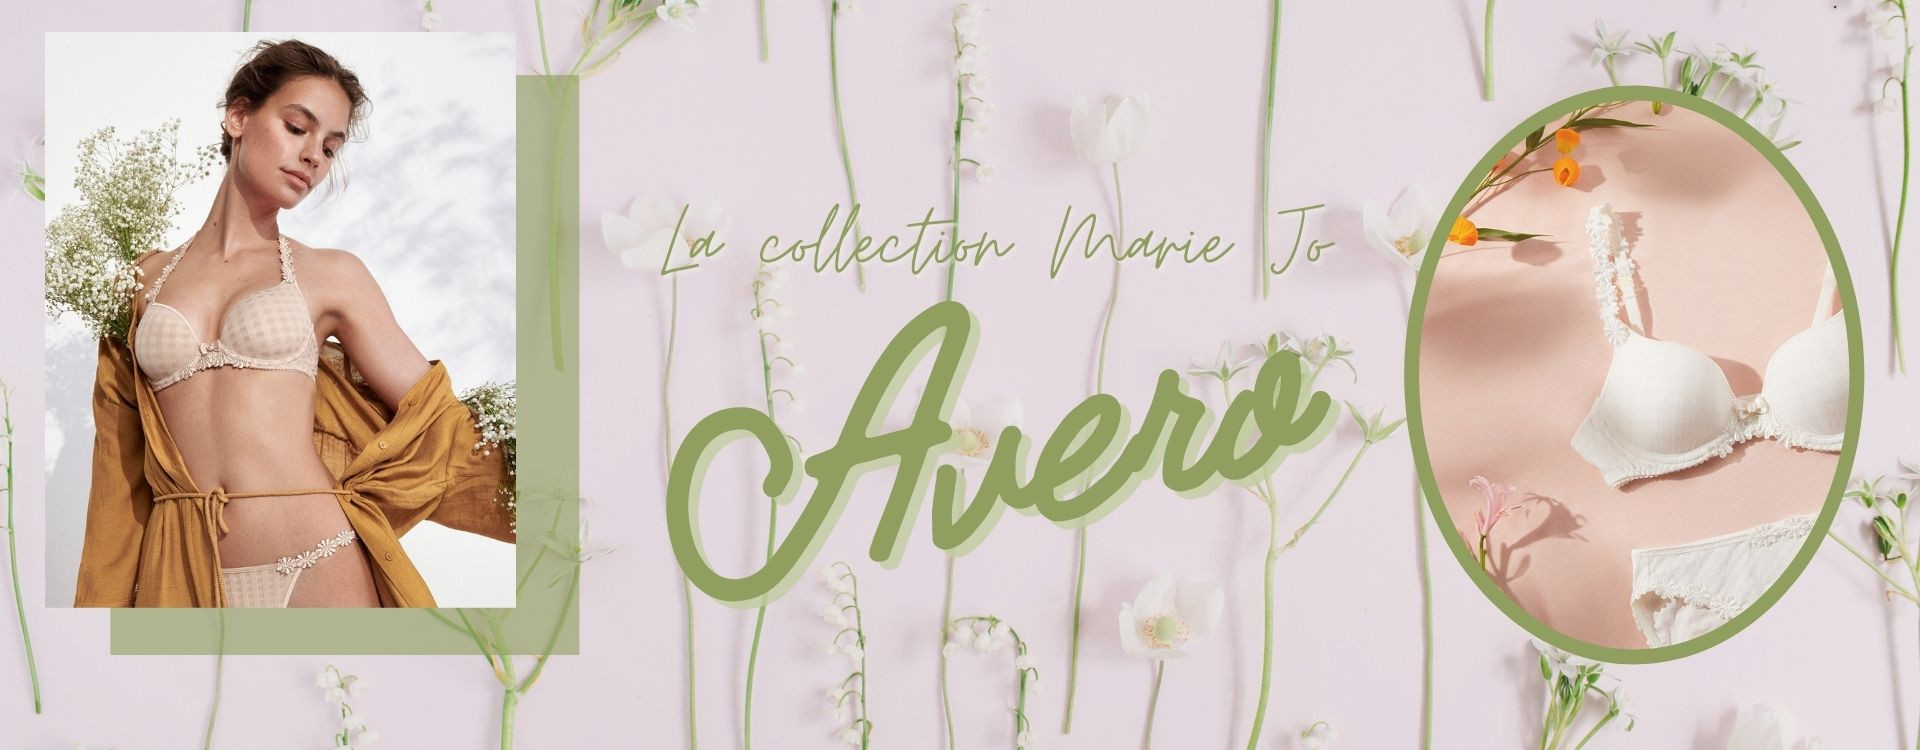 La collection Iconique de Marie Jo : Avero